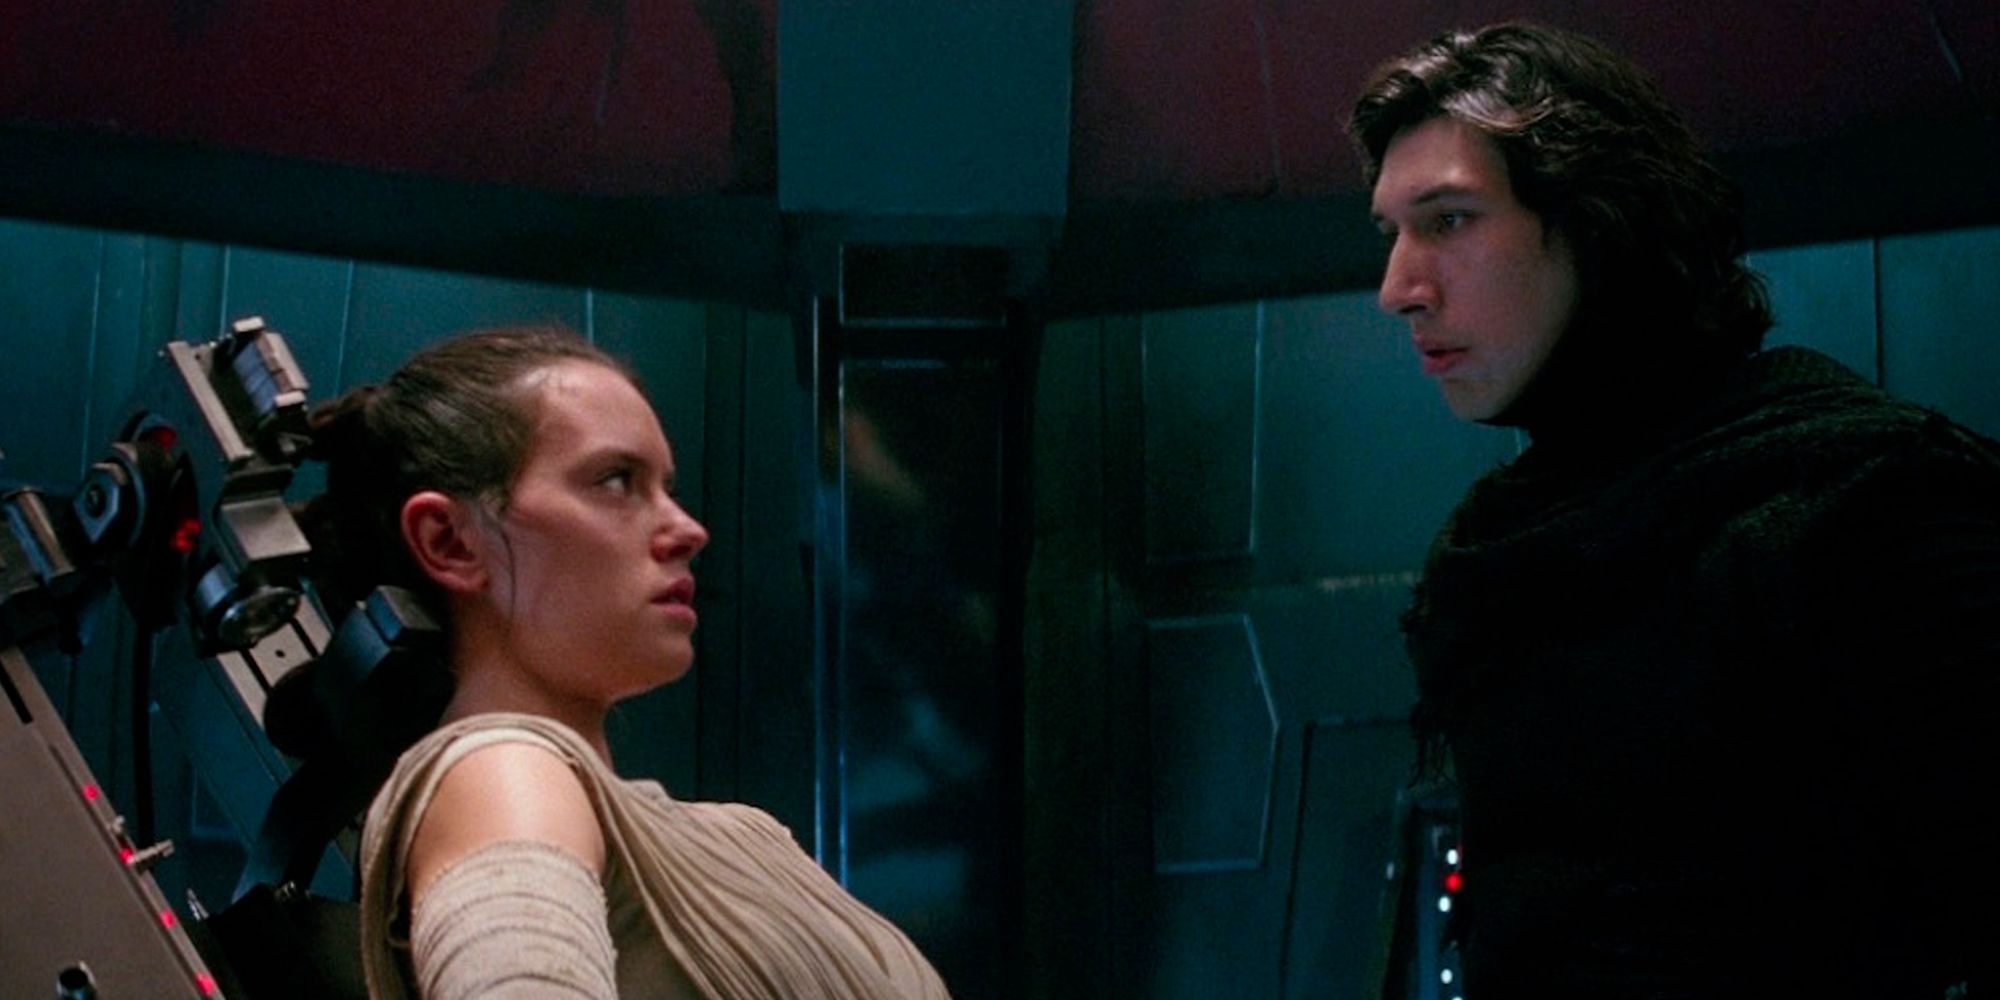 Rey being interrogated by Kylo Ren in Star Wars The Force Awakens